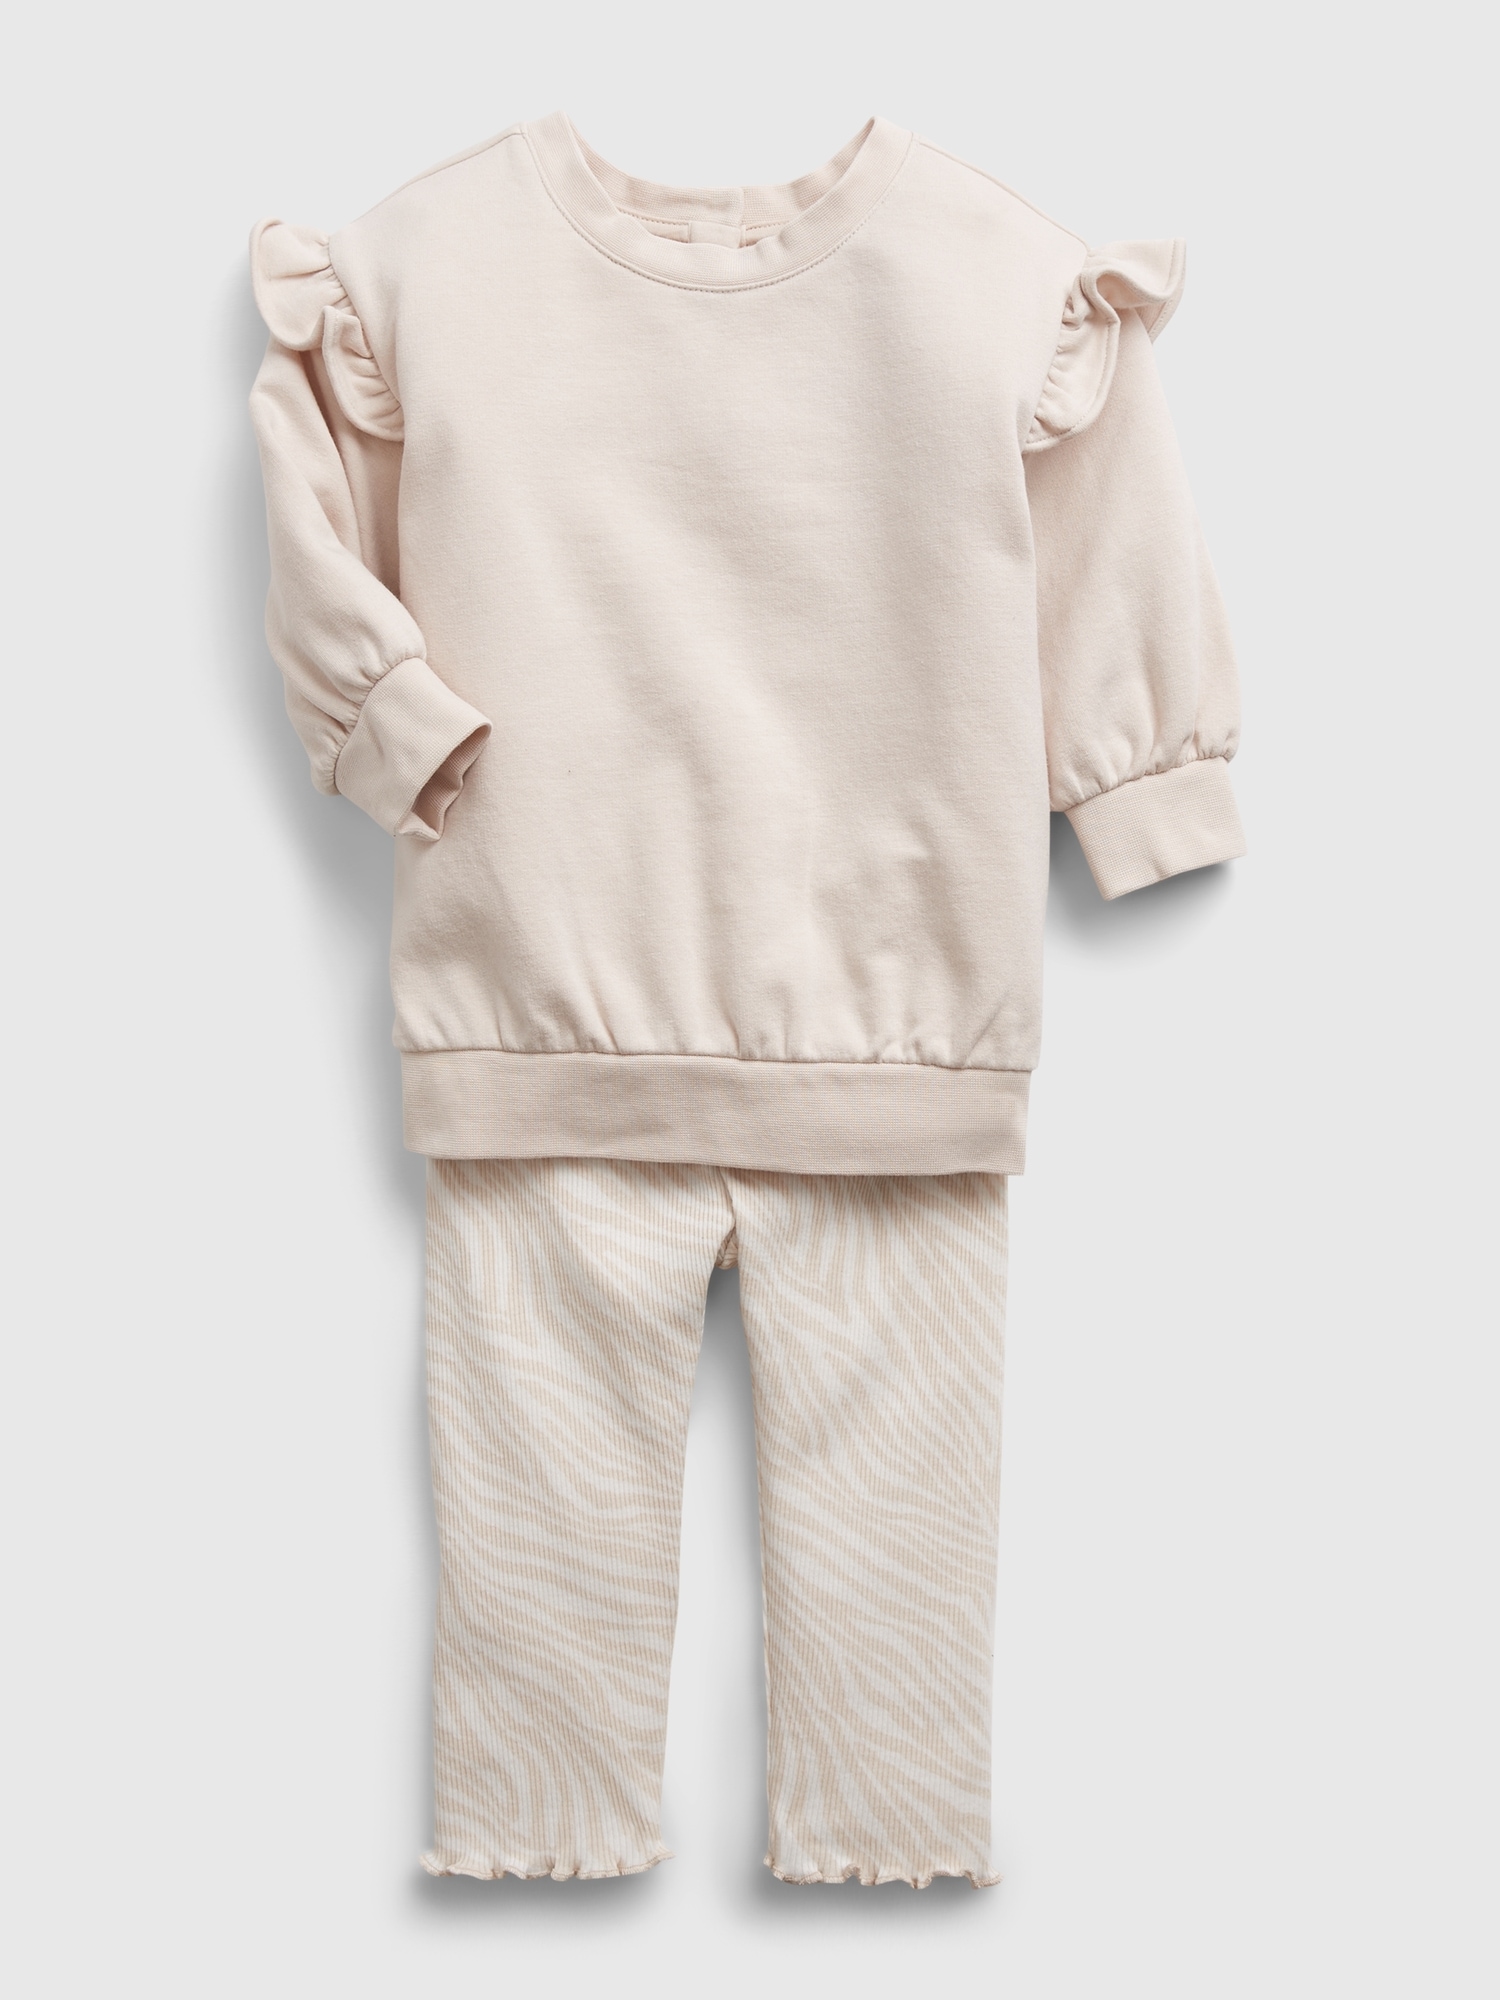 Baby Ruffle Tunic Outfit Set | Gap